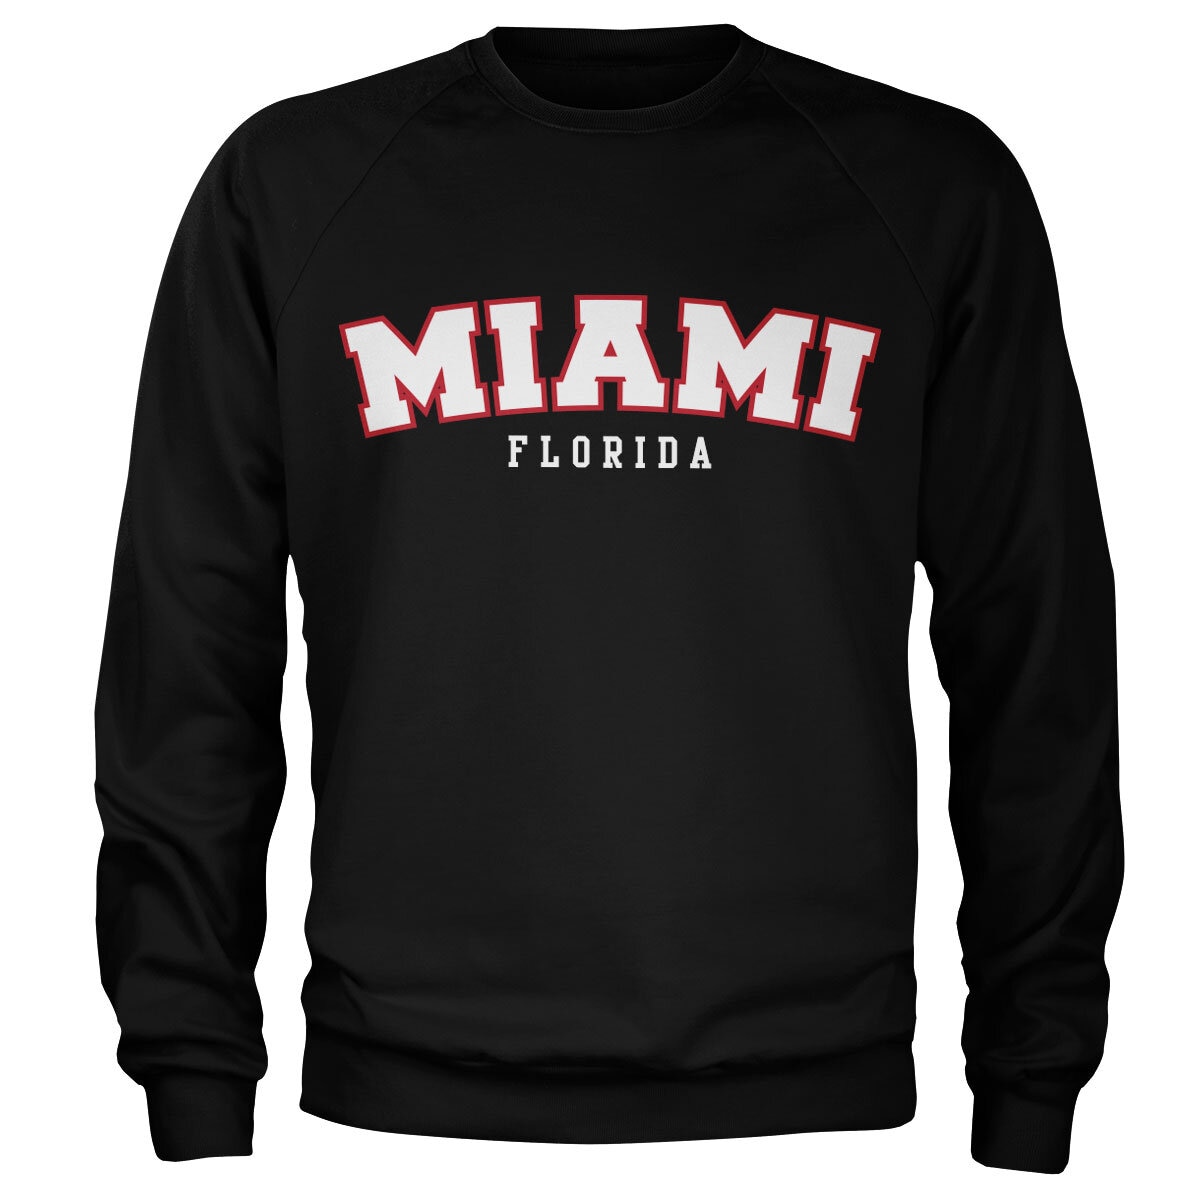 Miami - Florida Sweatshirt